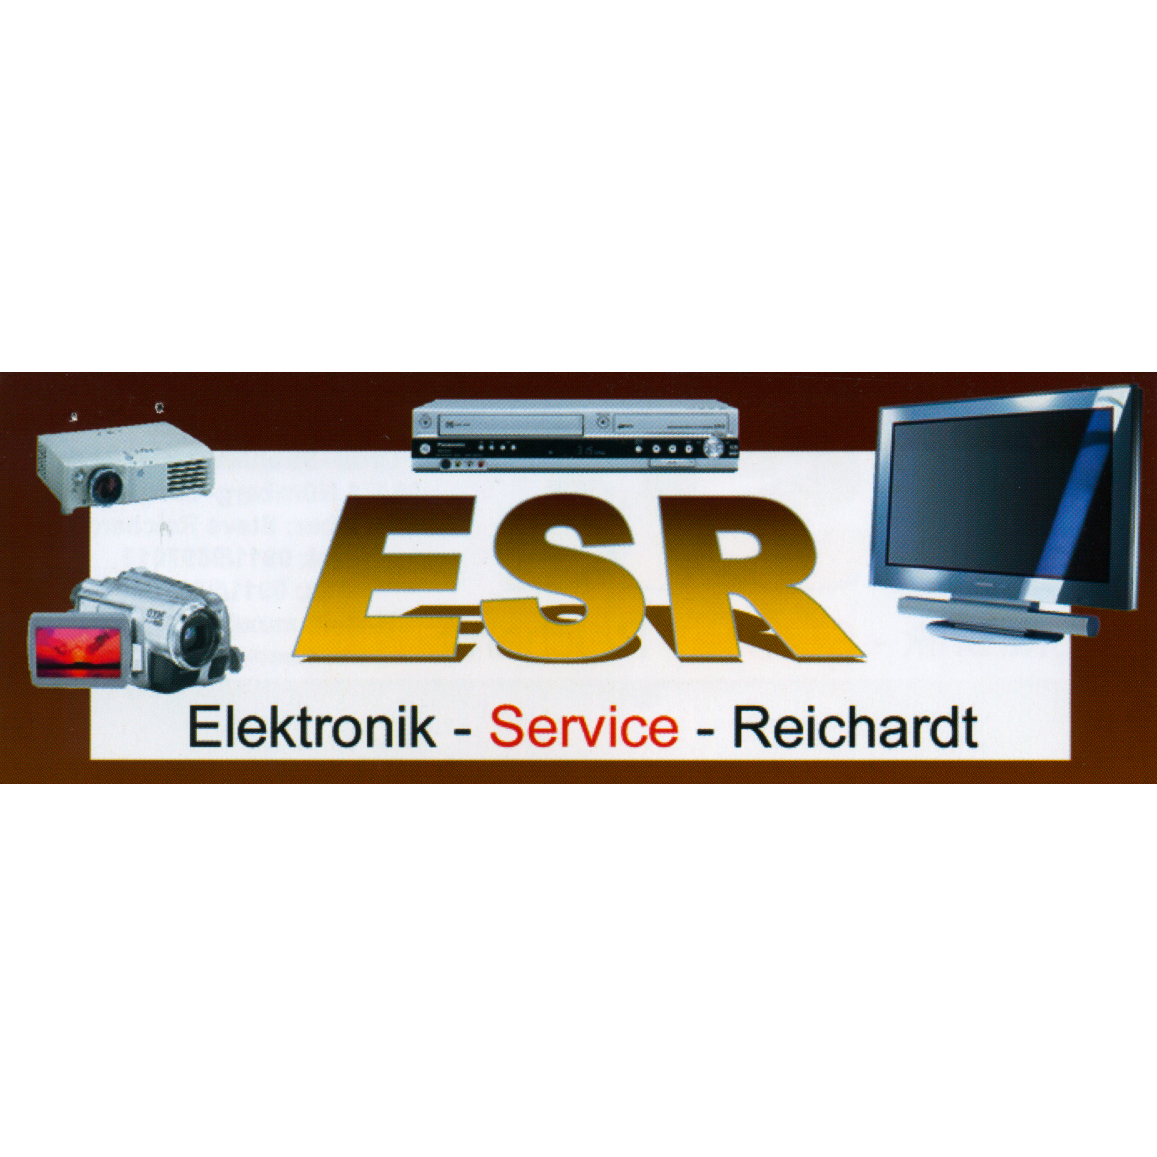 ESR - Elektronik Service Reichardt in Nürnberg - Logo